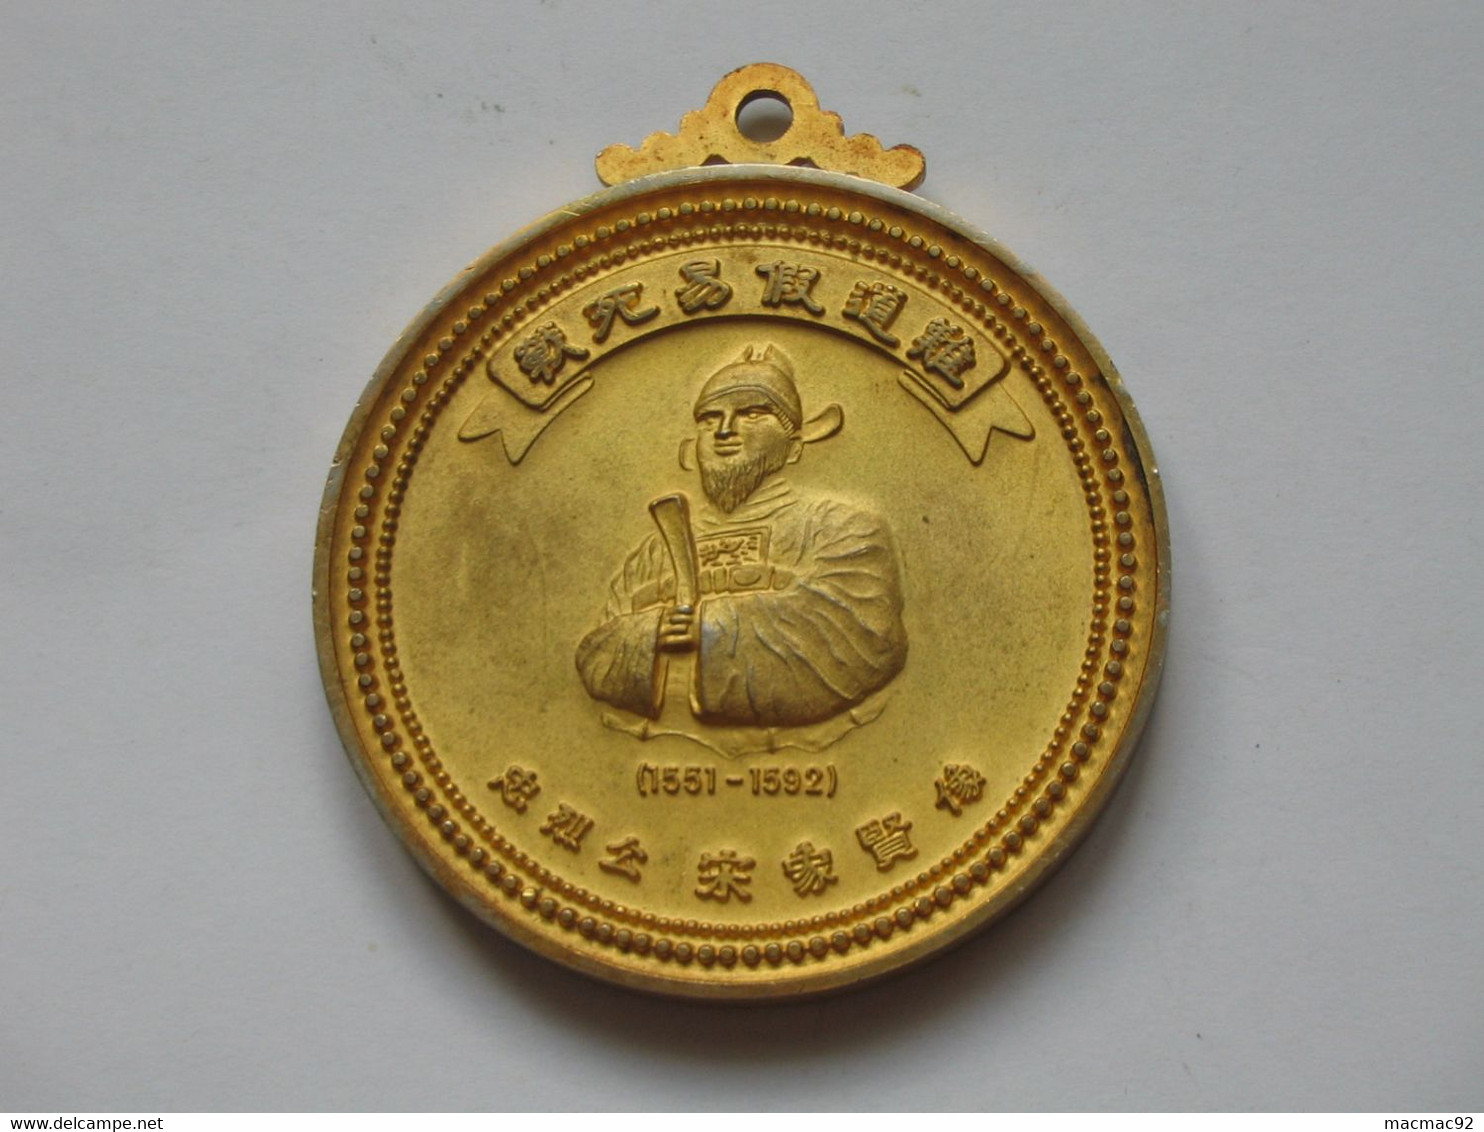 MAGNIFIQUE Médaille - WELCOME TO PUSAN REPUBLIC OF KOREA - MAYOR OF PUSAN  **** EN ACHAT IMMEDIAT  **** - Royal / Of Nobility